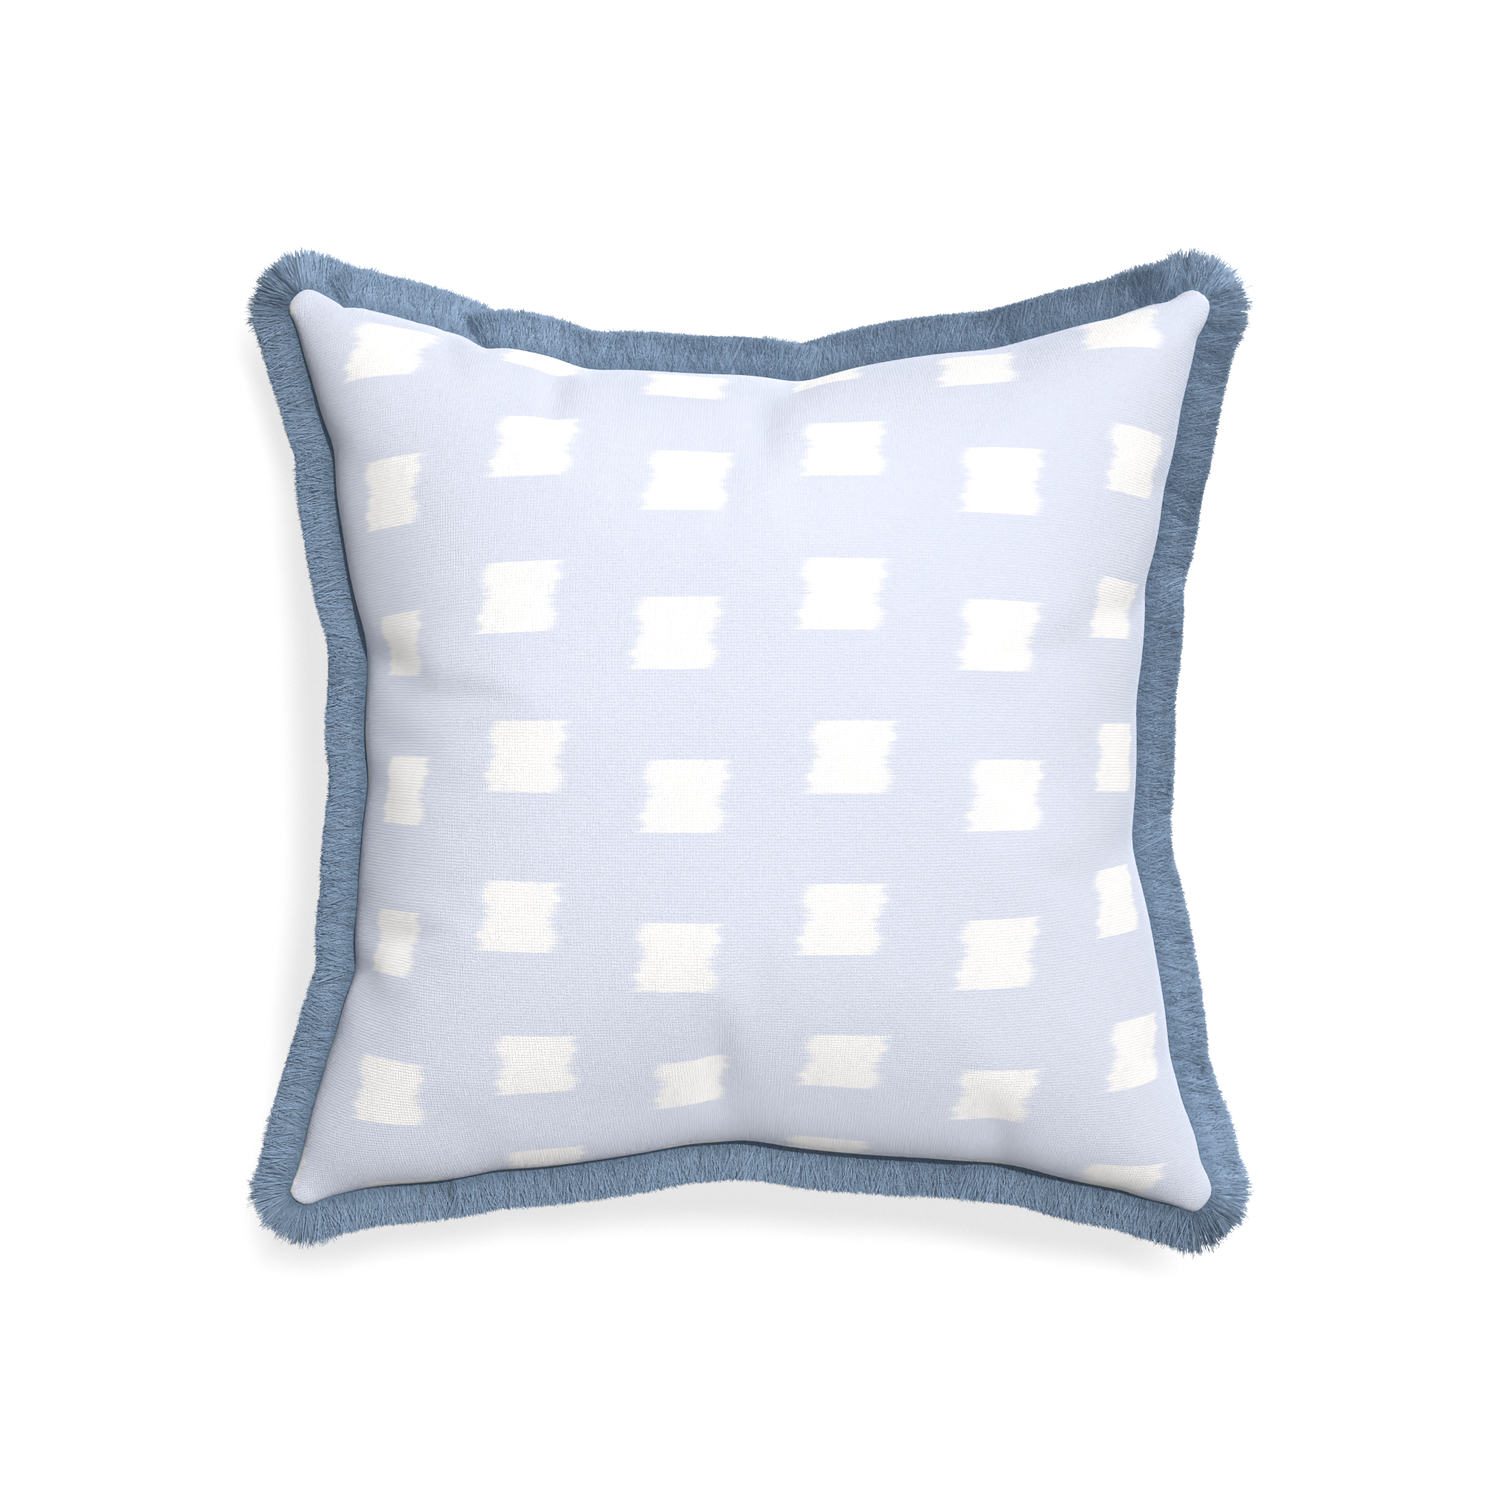 20-square denton custom pillow with sky fringe on white background